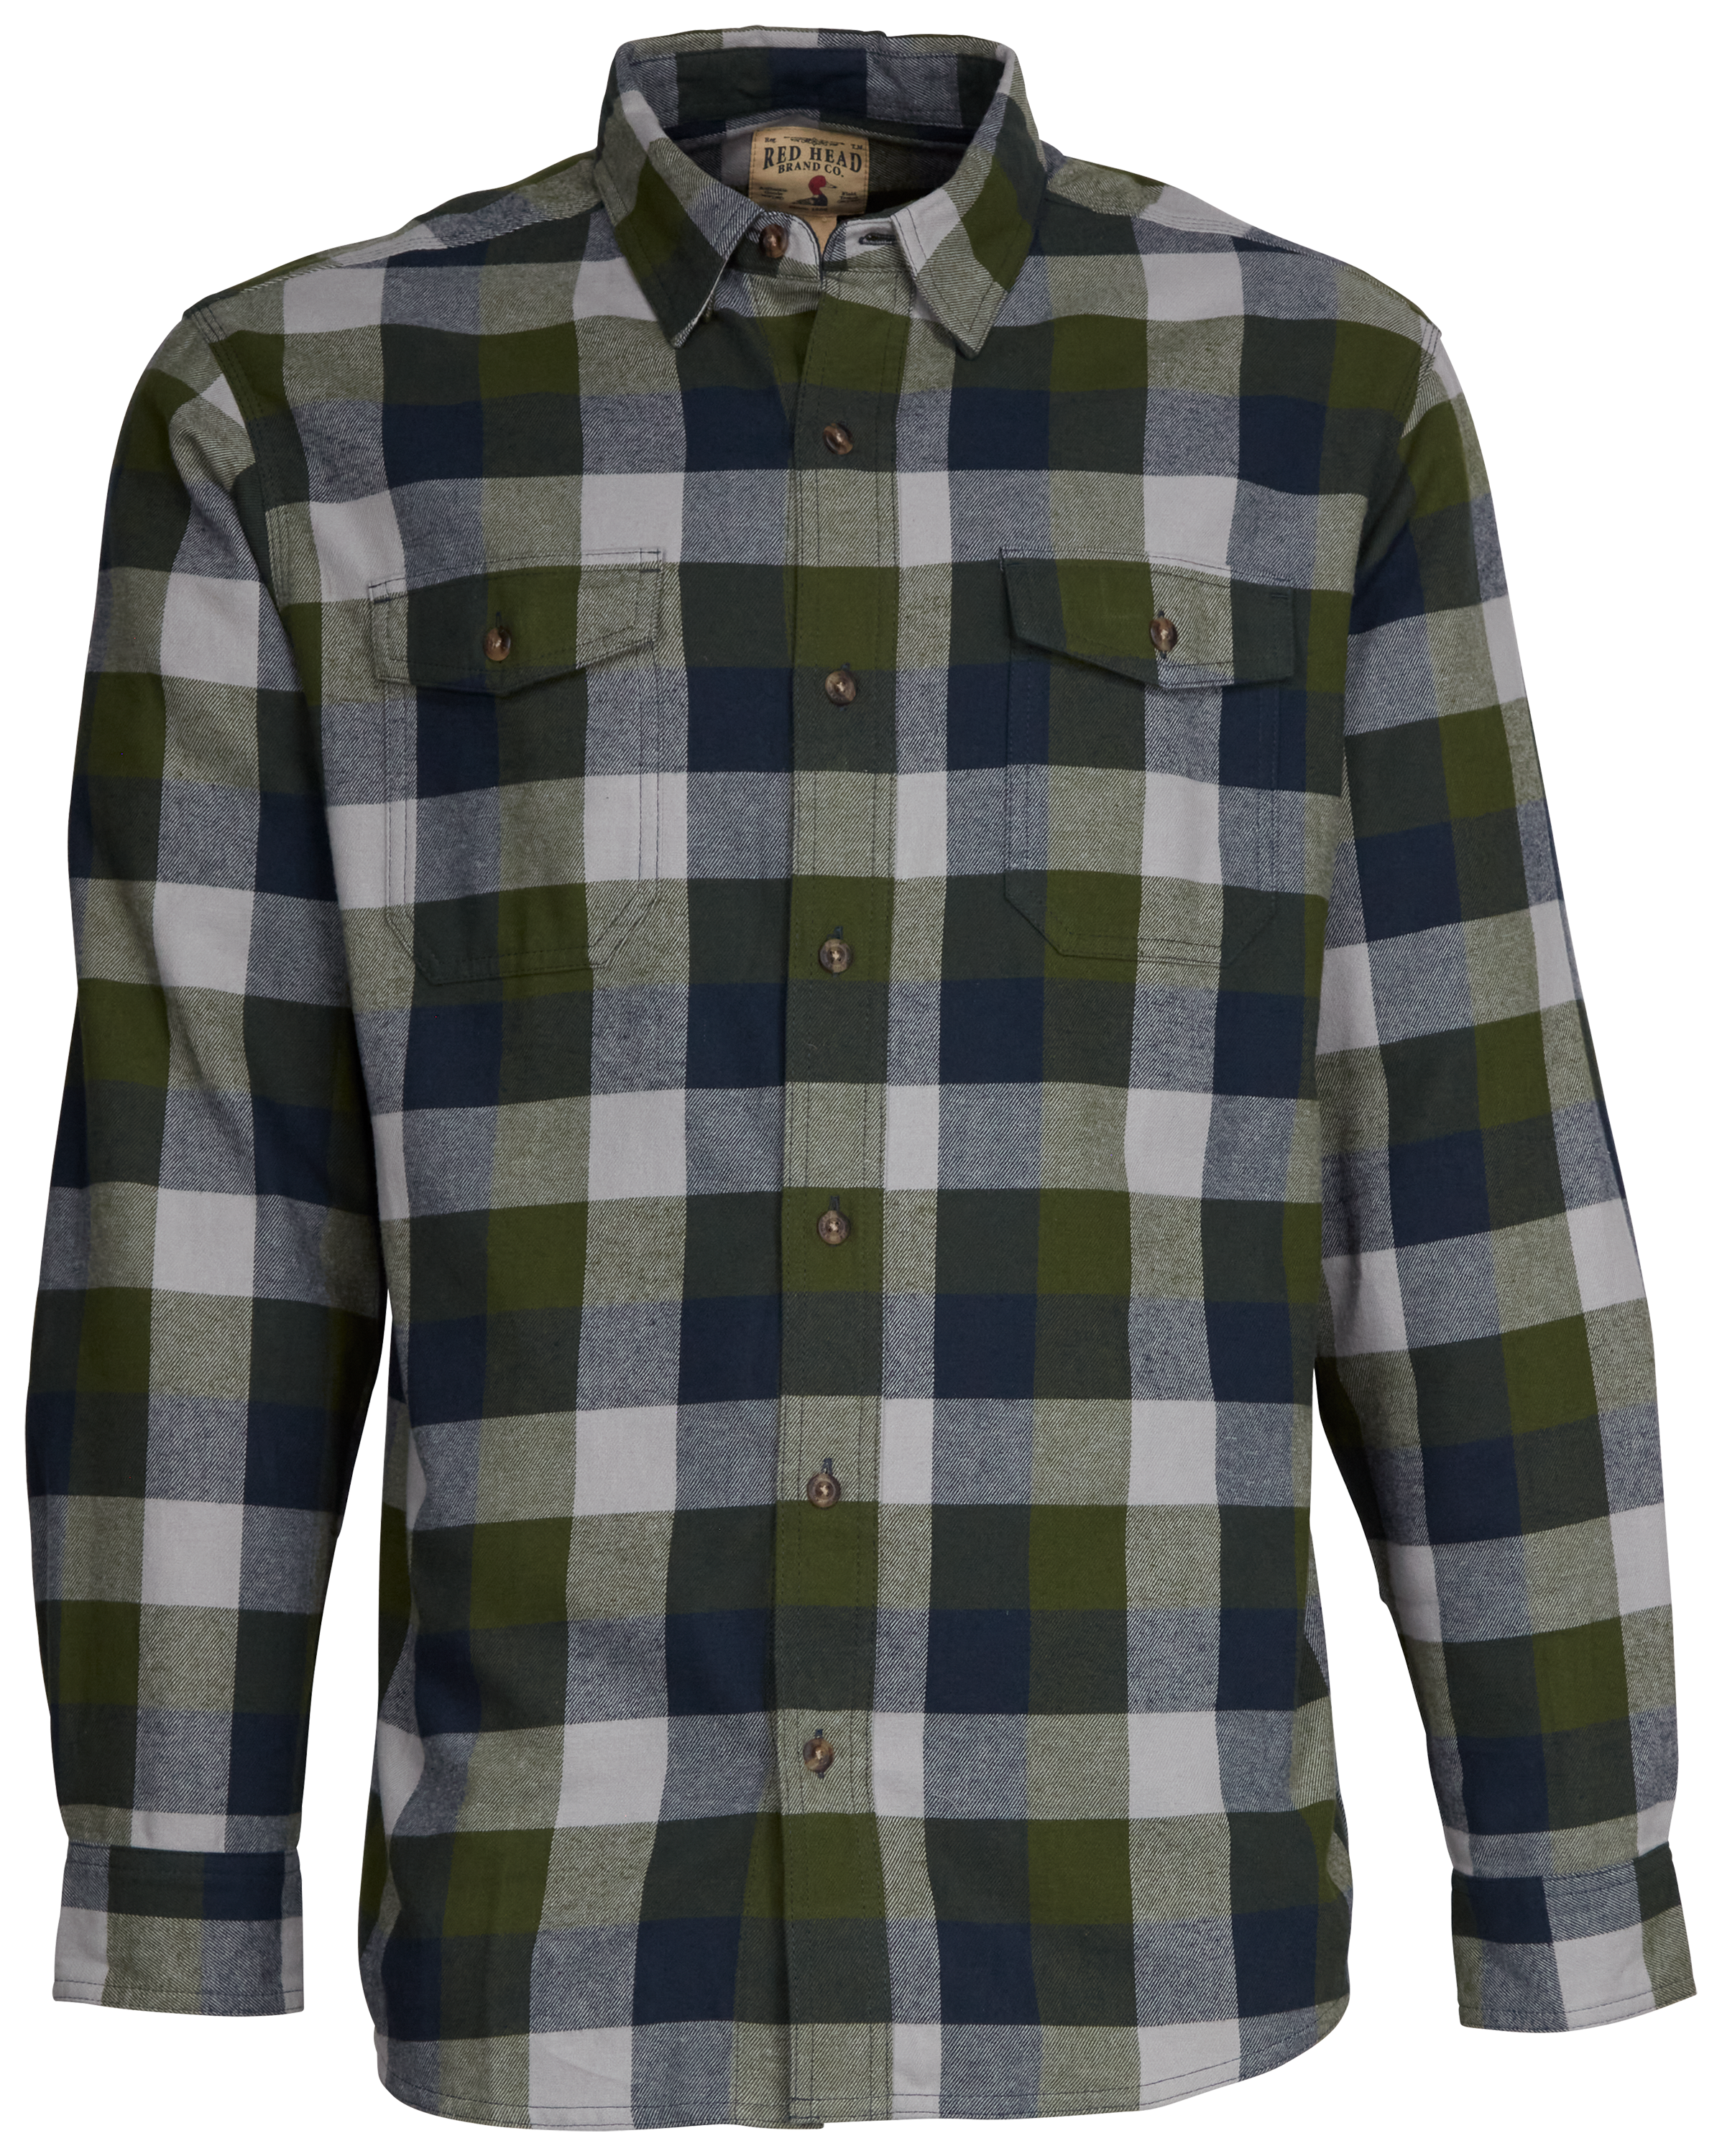 RedHead Buffalo Creek Flannel Long-Sleeve Shirt for Men - Pine/Navy - S